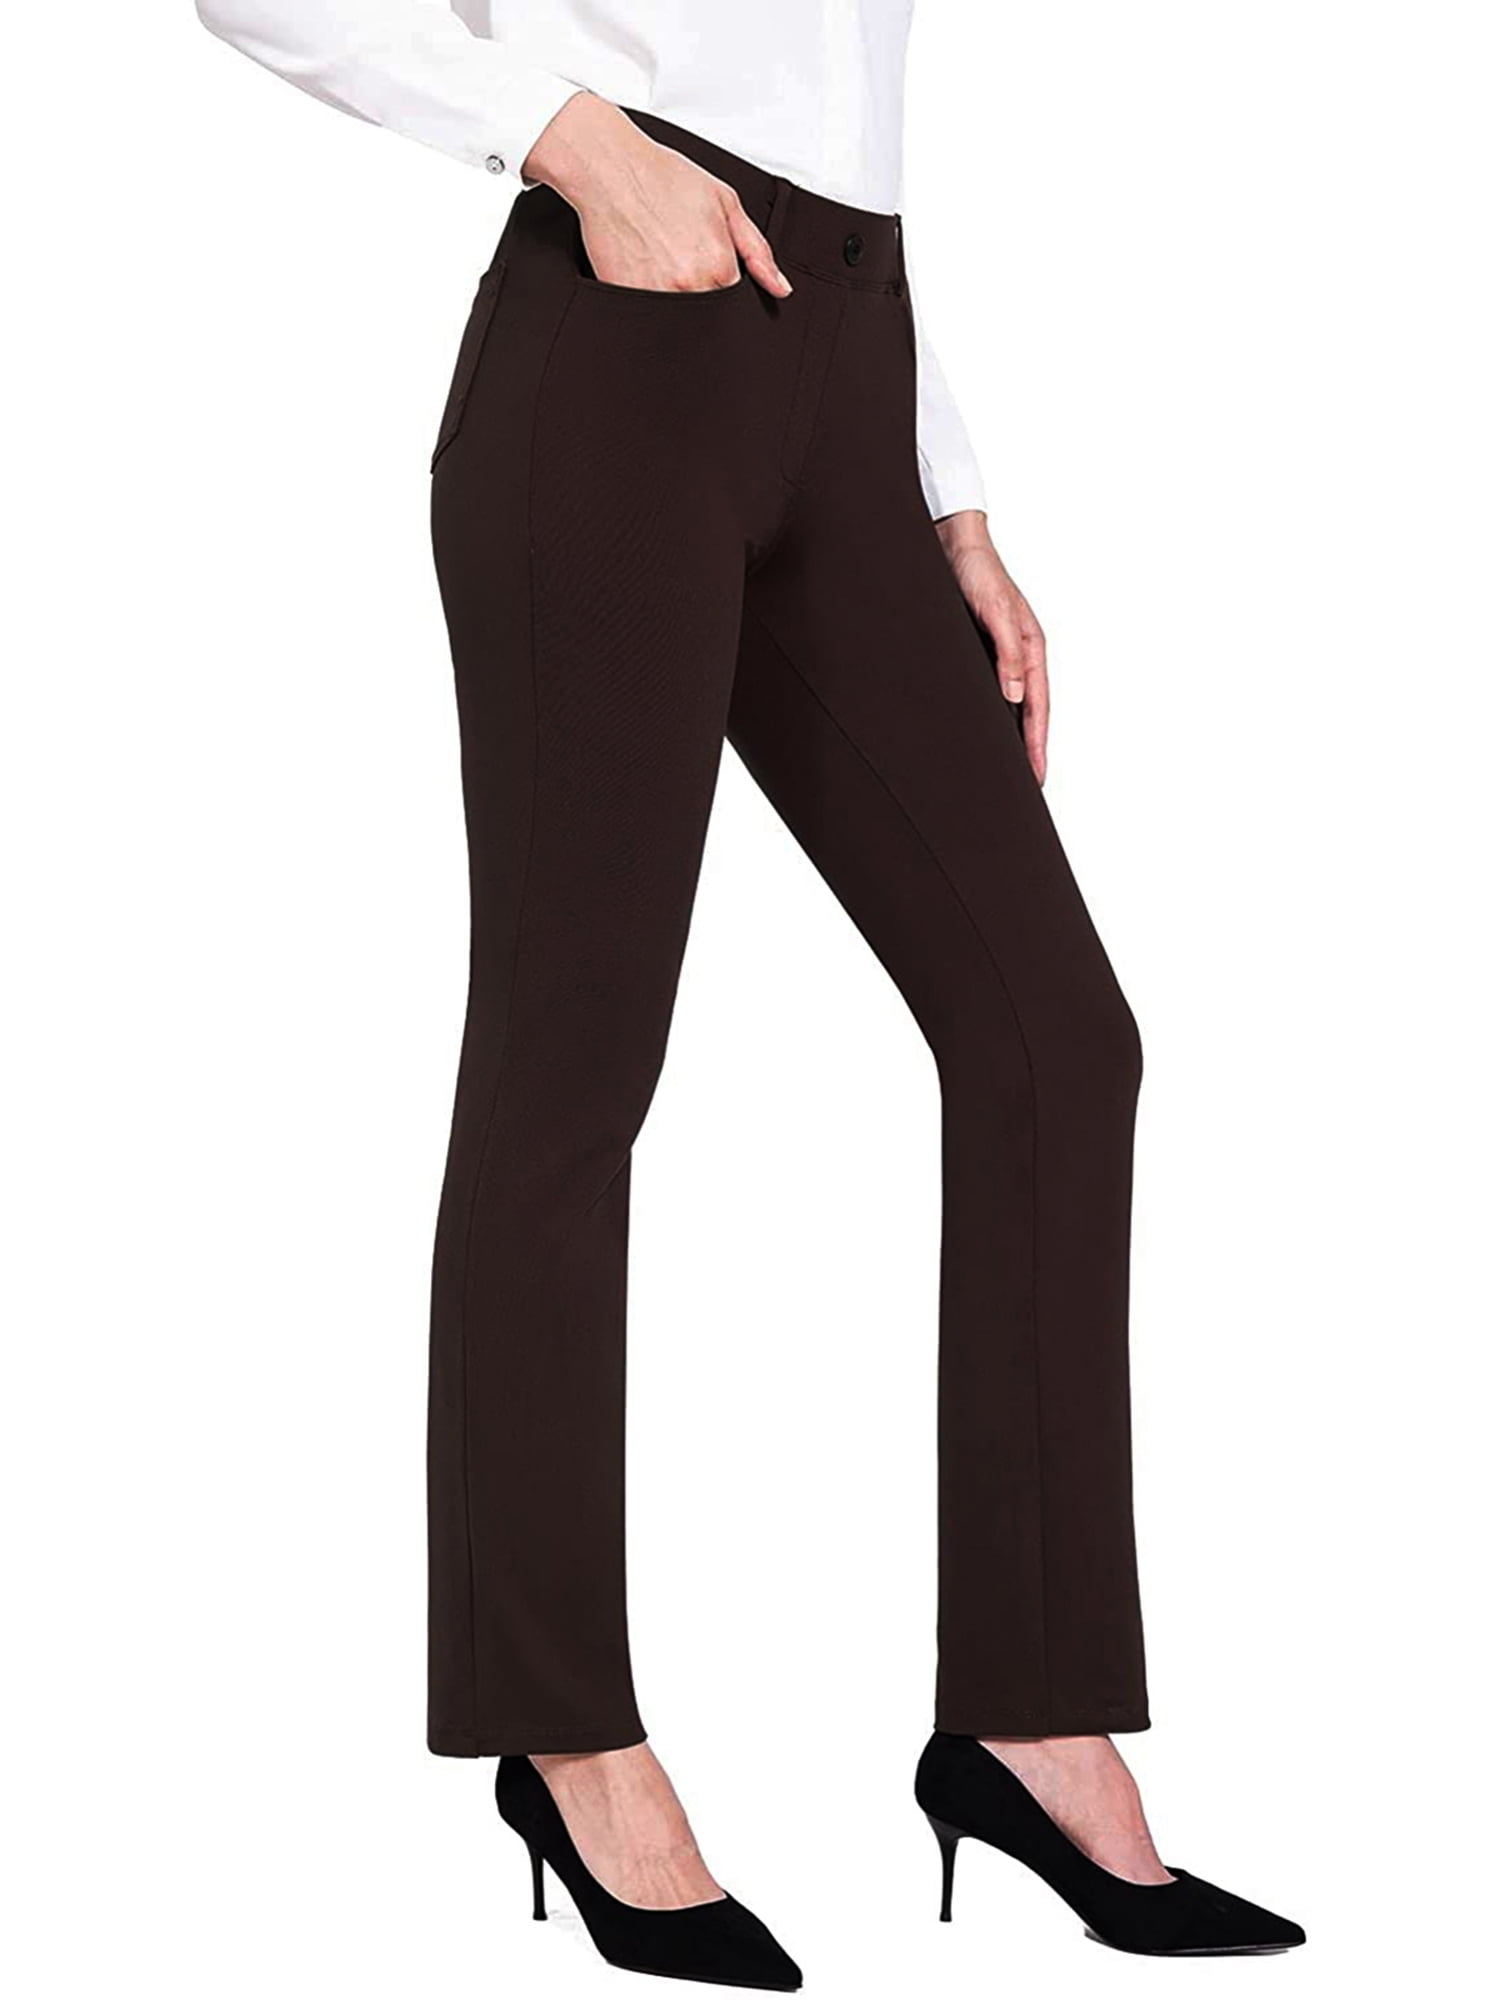 Calsunbaby Bootcut Yoga Pants for Women Stretchy Work Business Slacks Dress  Pants Casual Straight Leg Trousers Black L